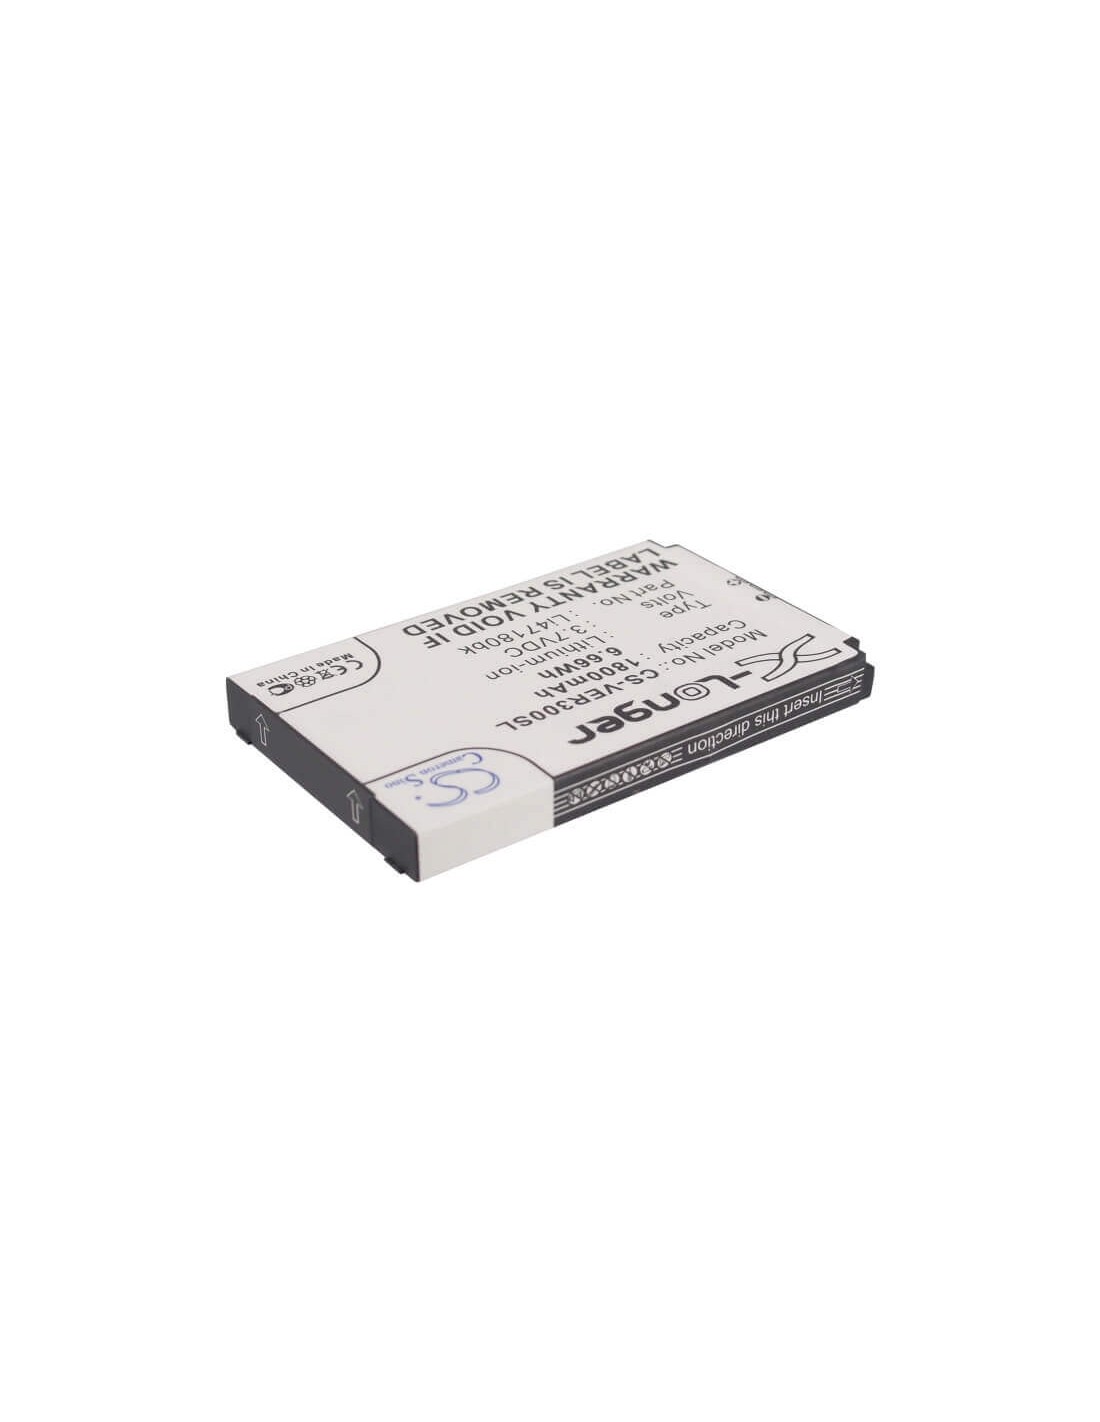 Battery for ViewSonic Q3, Q5, Q1 3.7V, 1800mAh - 6.66Wh